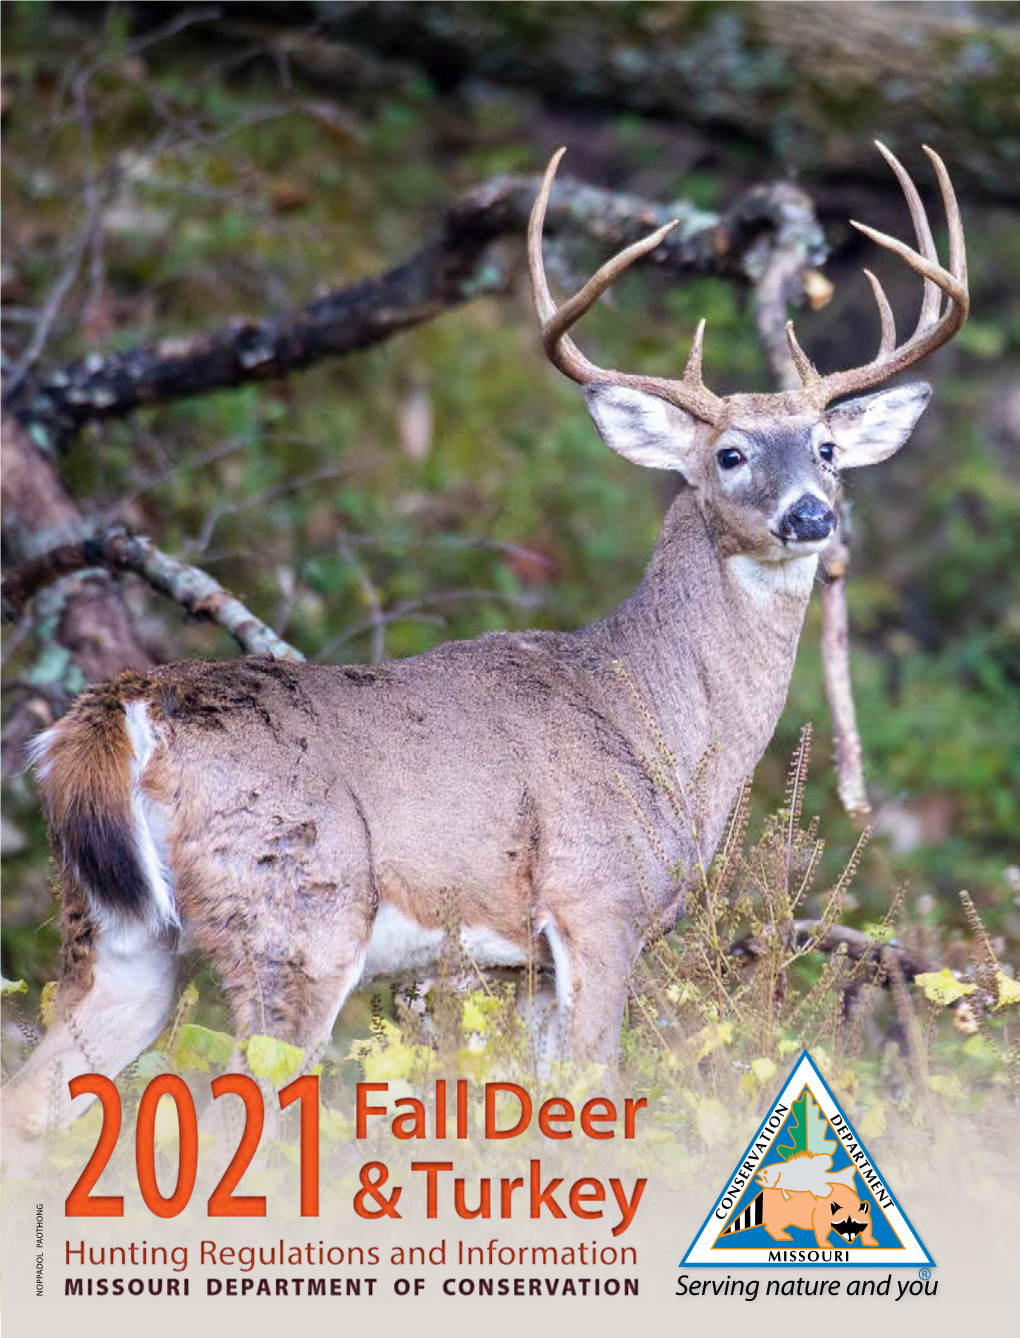 2021 Fall Deer & Turkey Hunting Regulations and Information